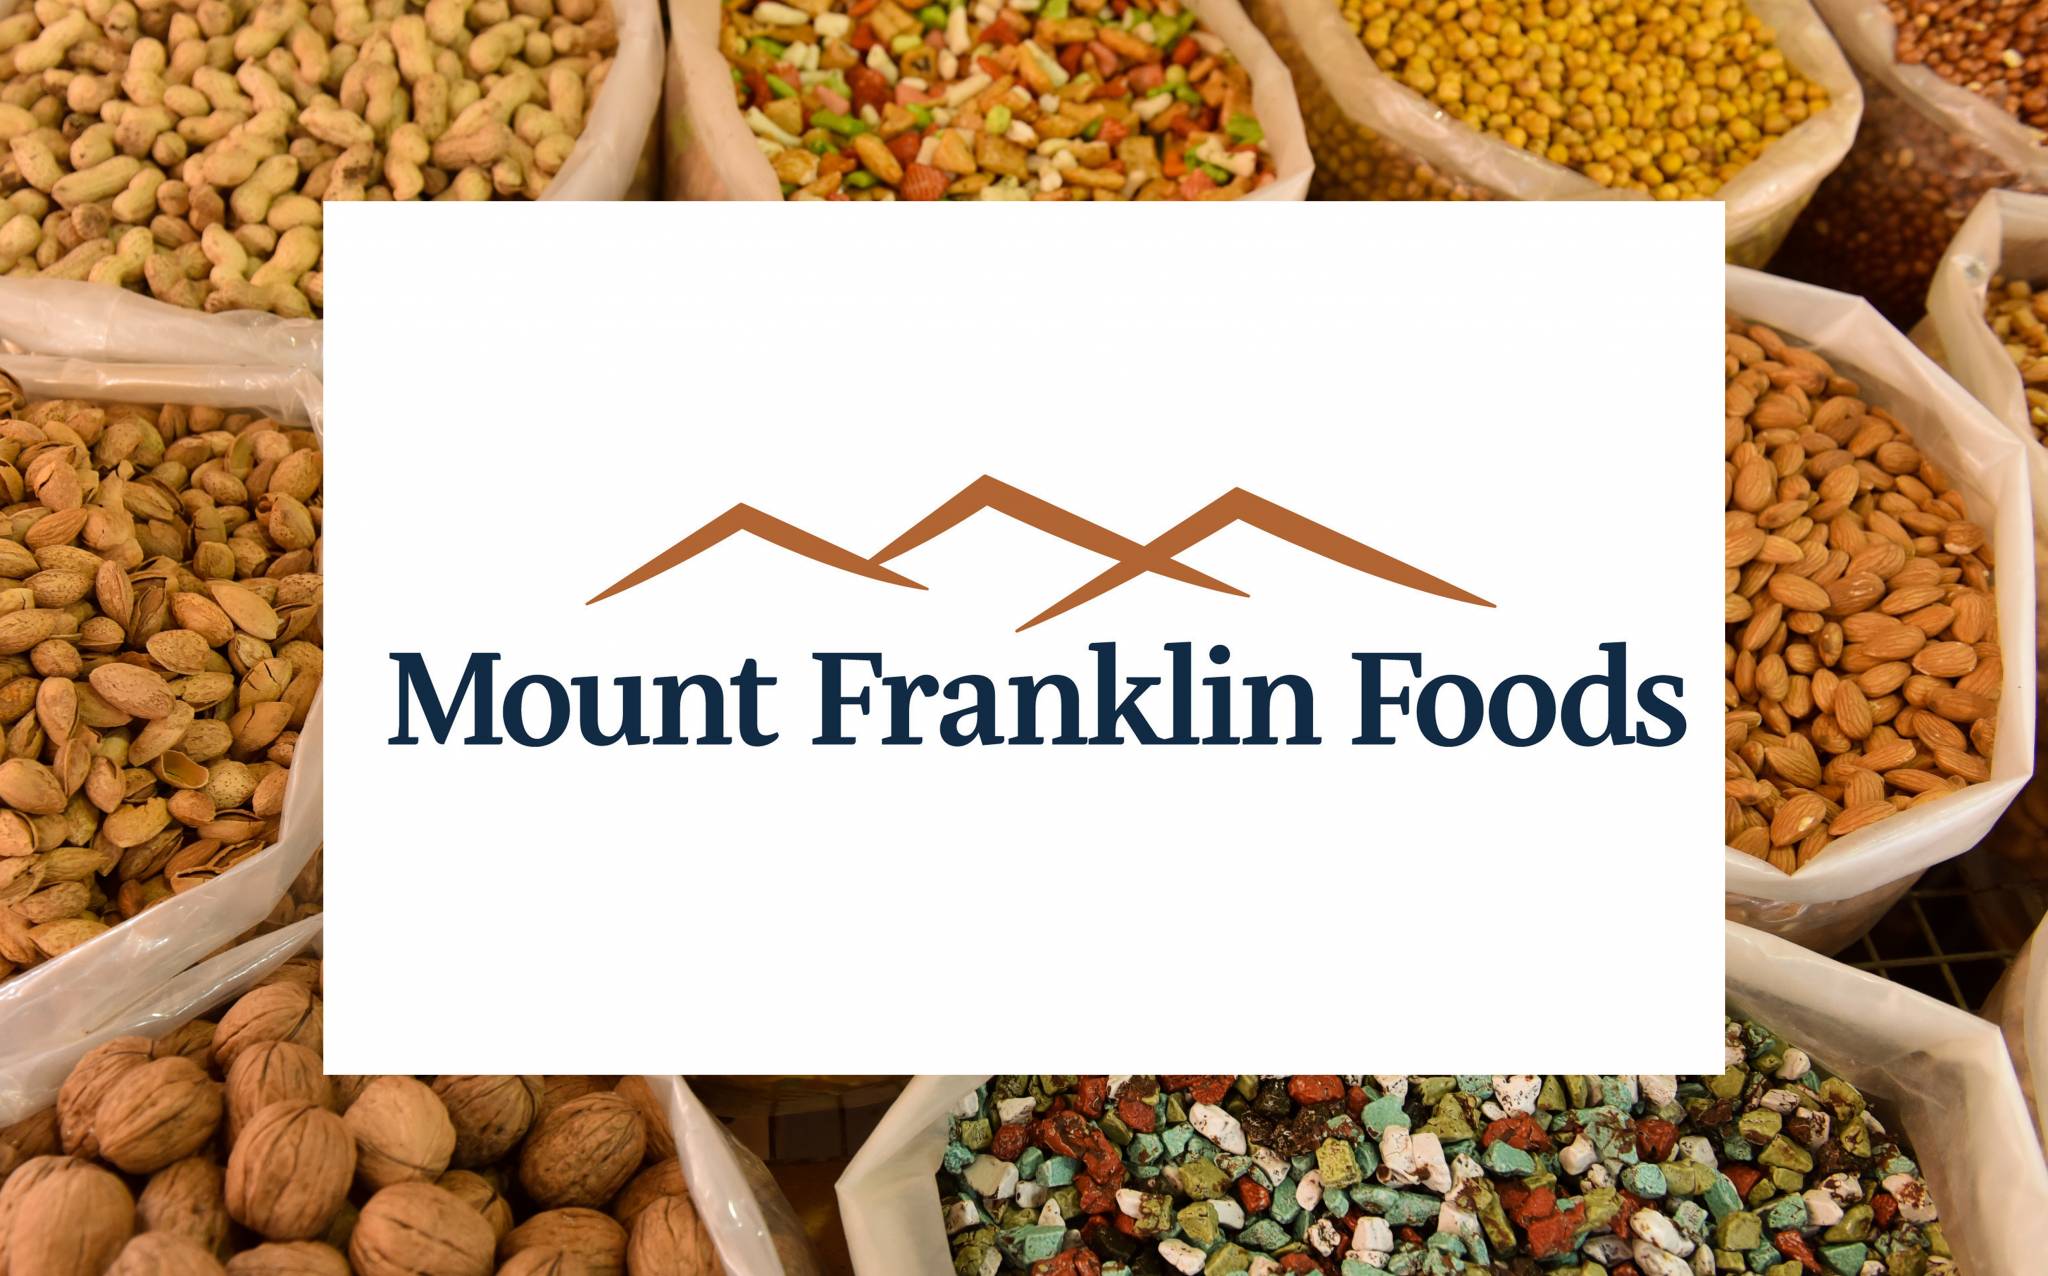 Mount Franklin Foods acquires Arro Corporation divisions